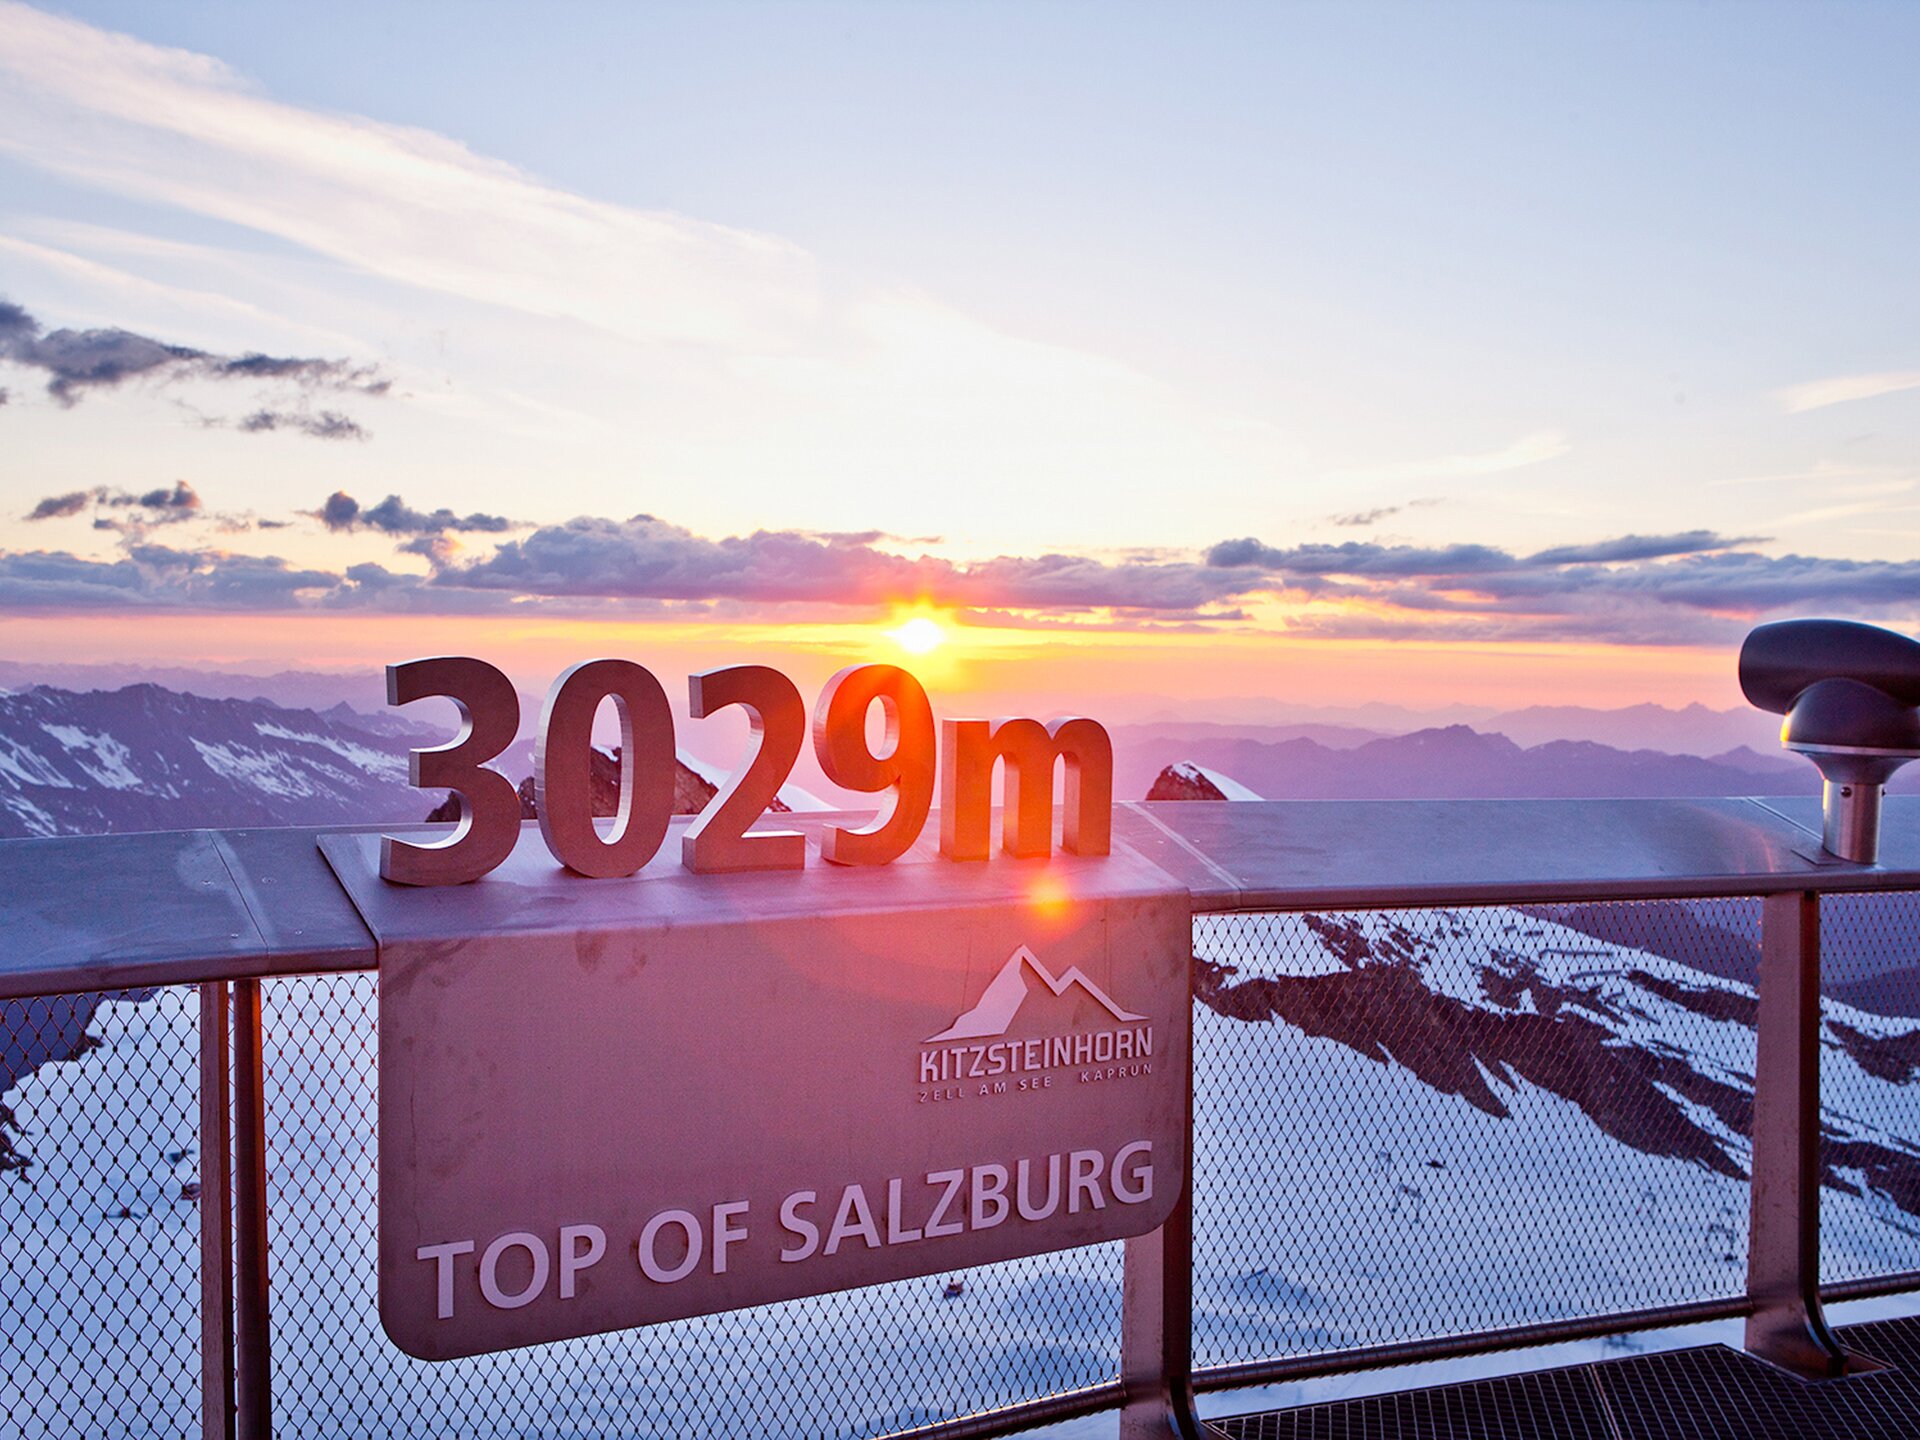 Top of Salzburg view